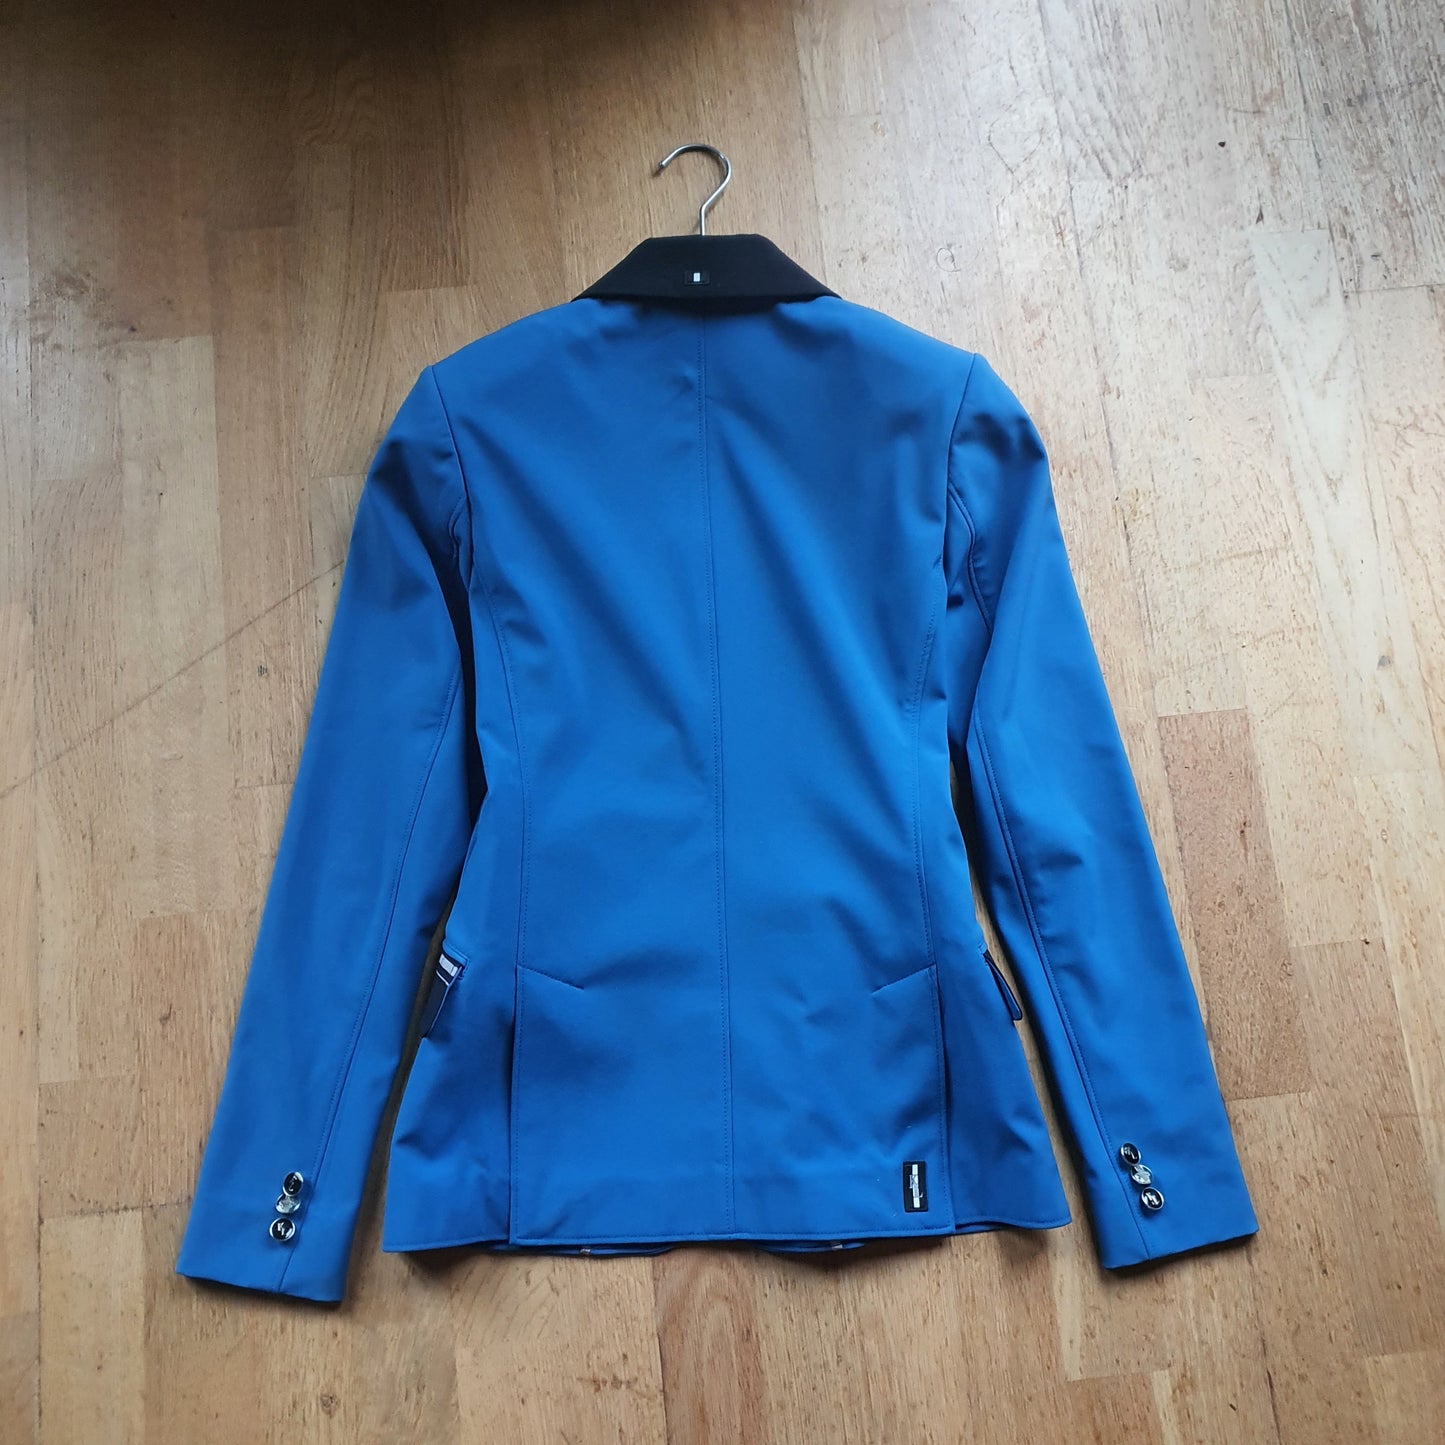 Kingsland sky blue show jacket ladies size 8